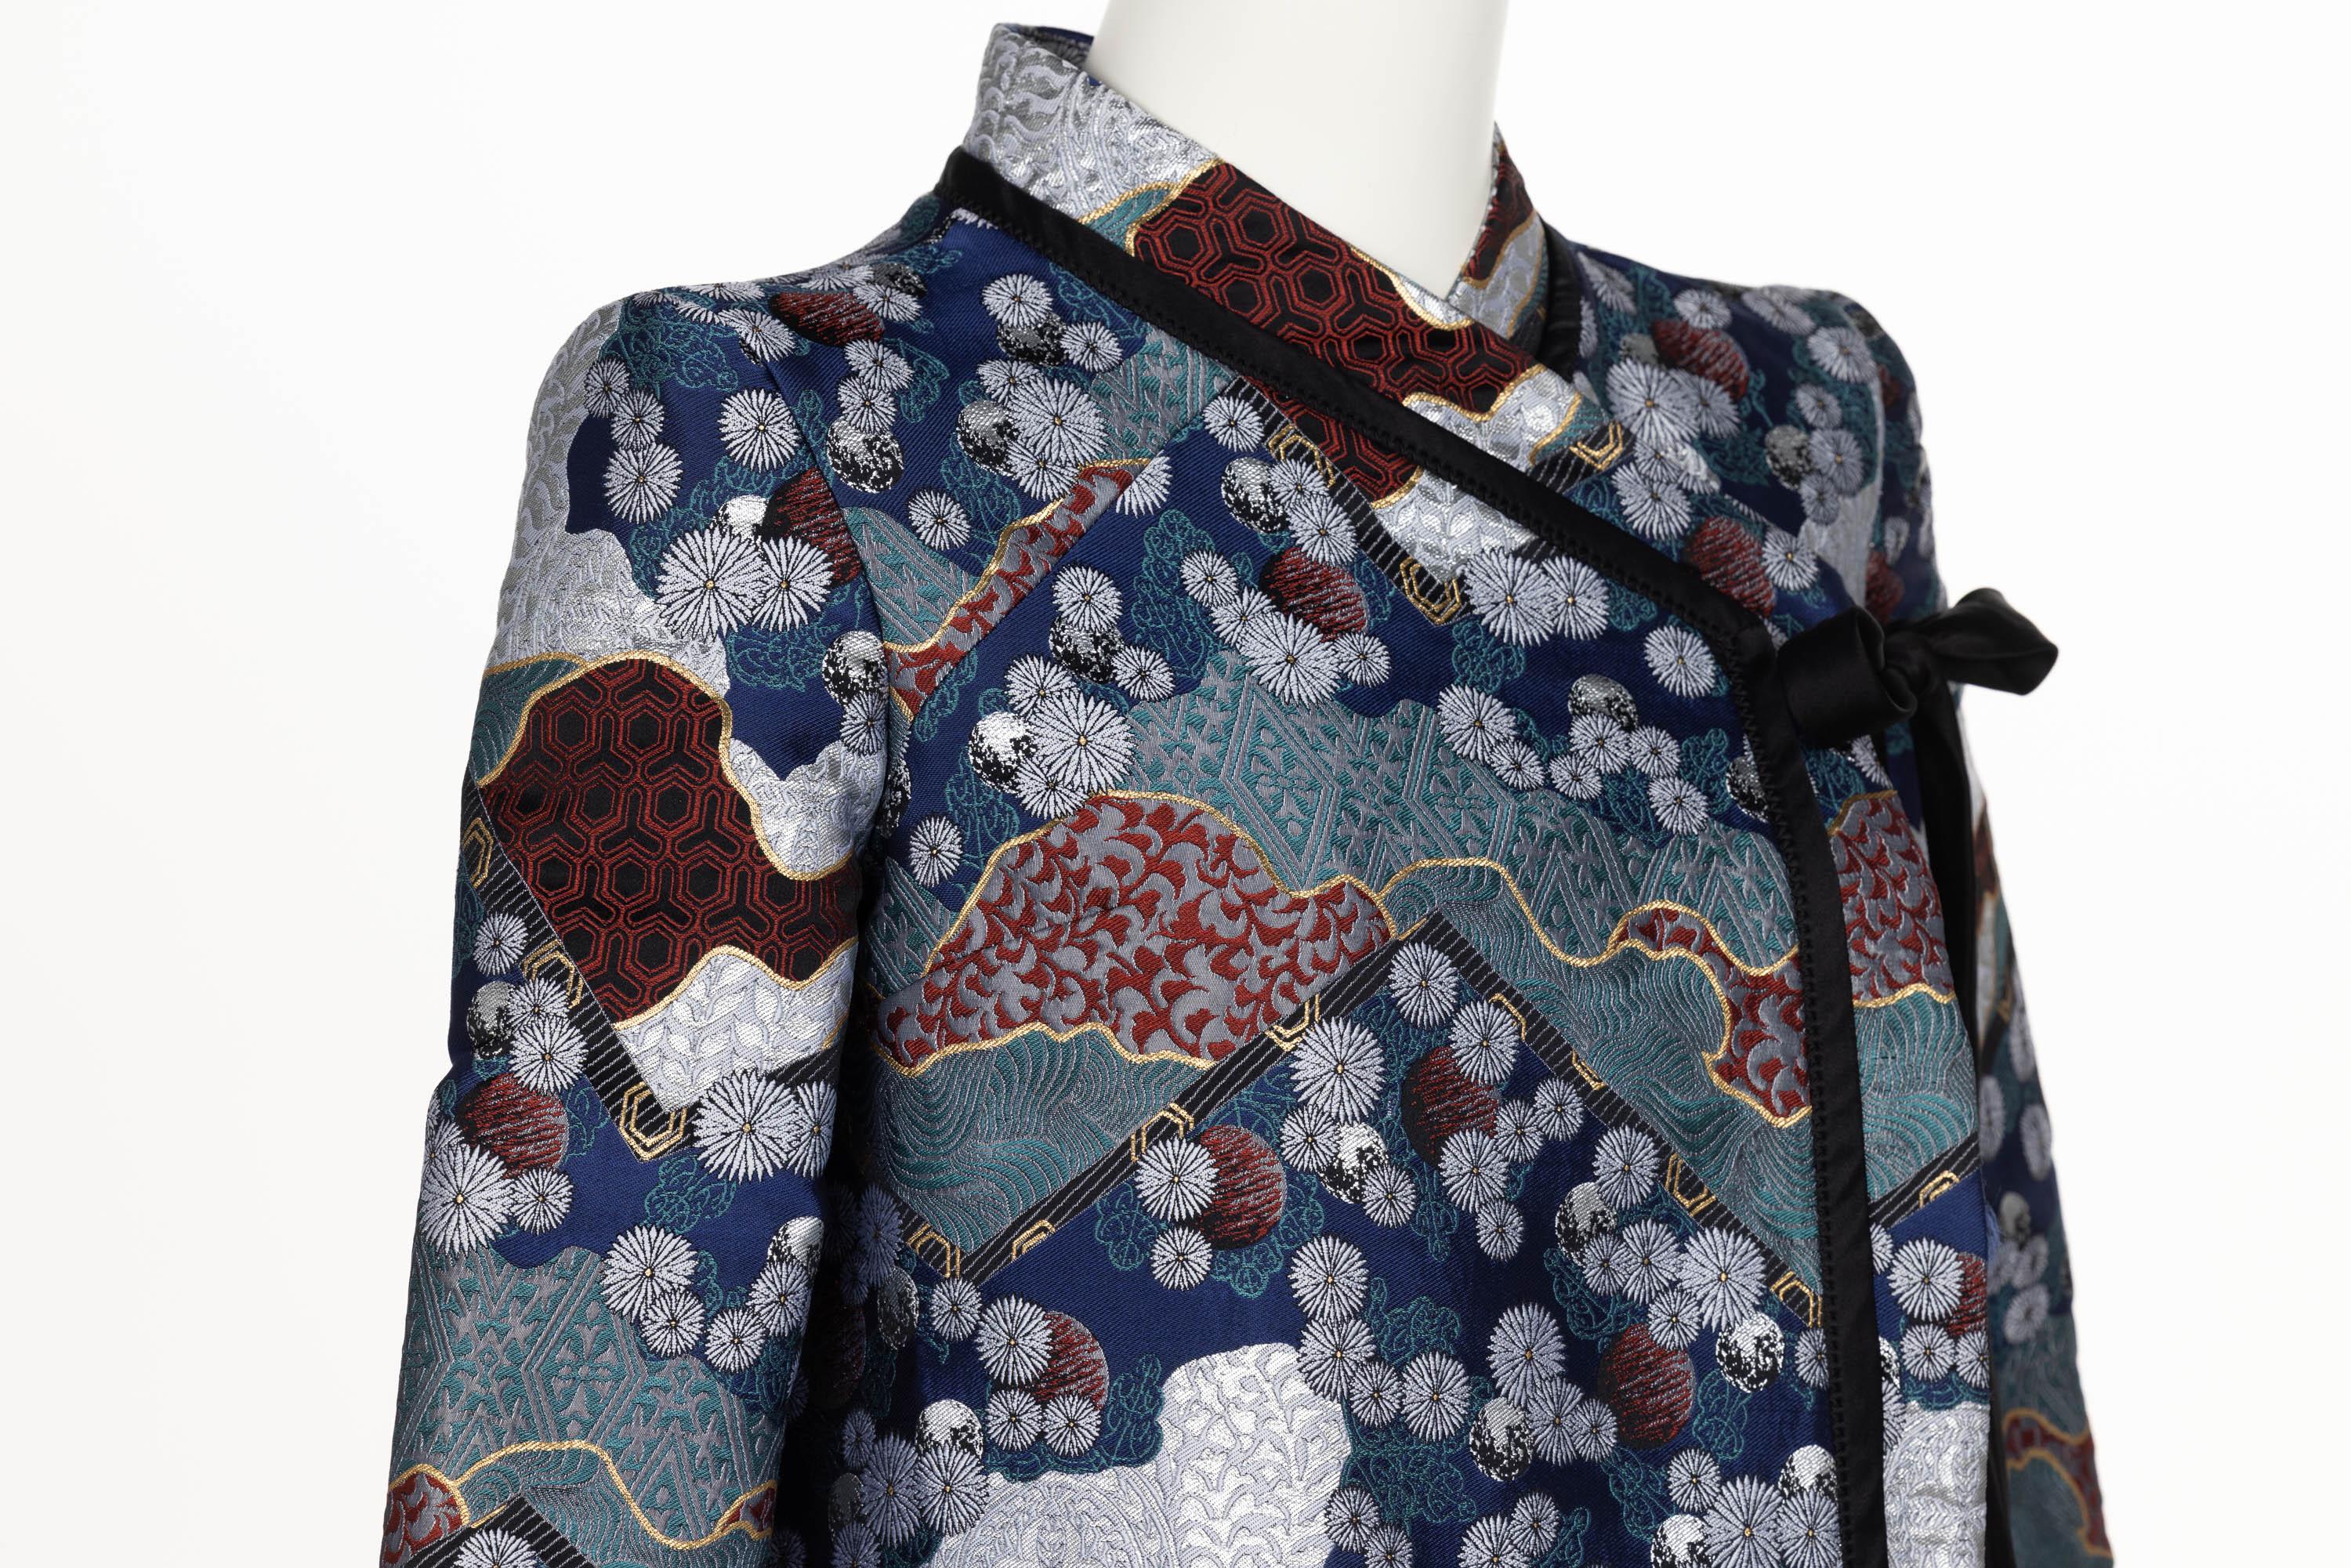 Proenza Schouler Fall 2012 Brocade Dress / Coat For Sale 3